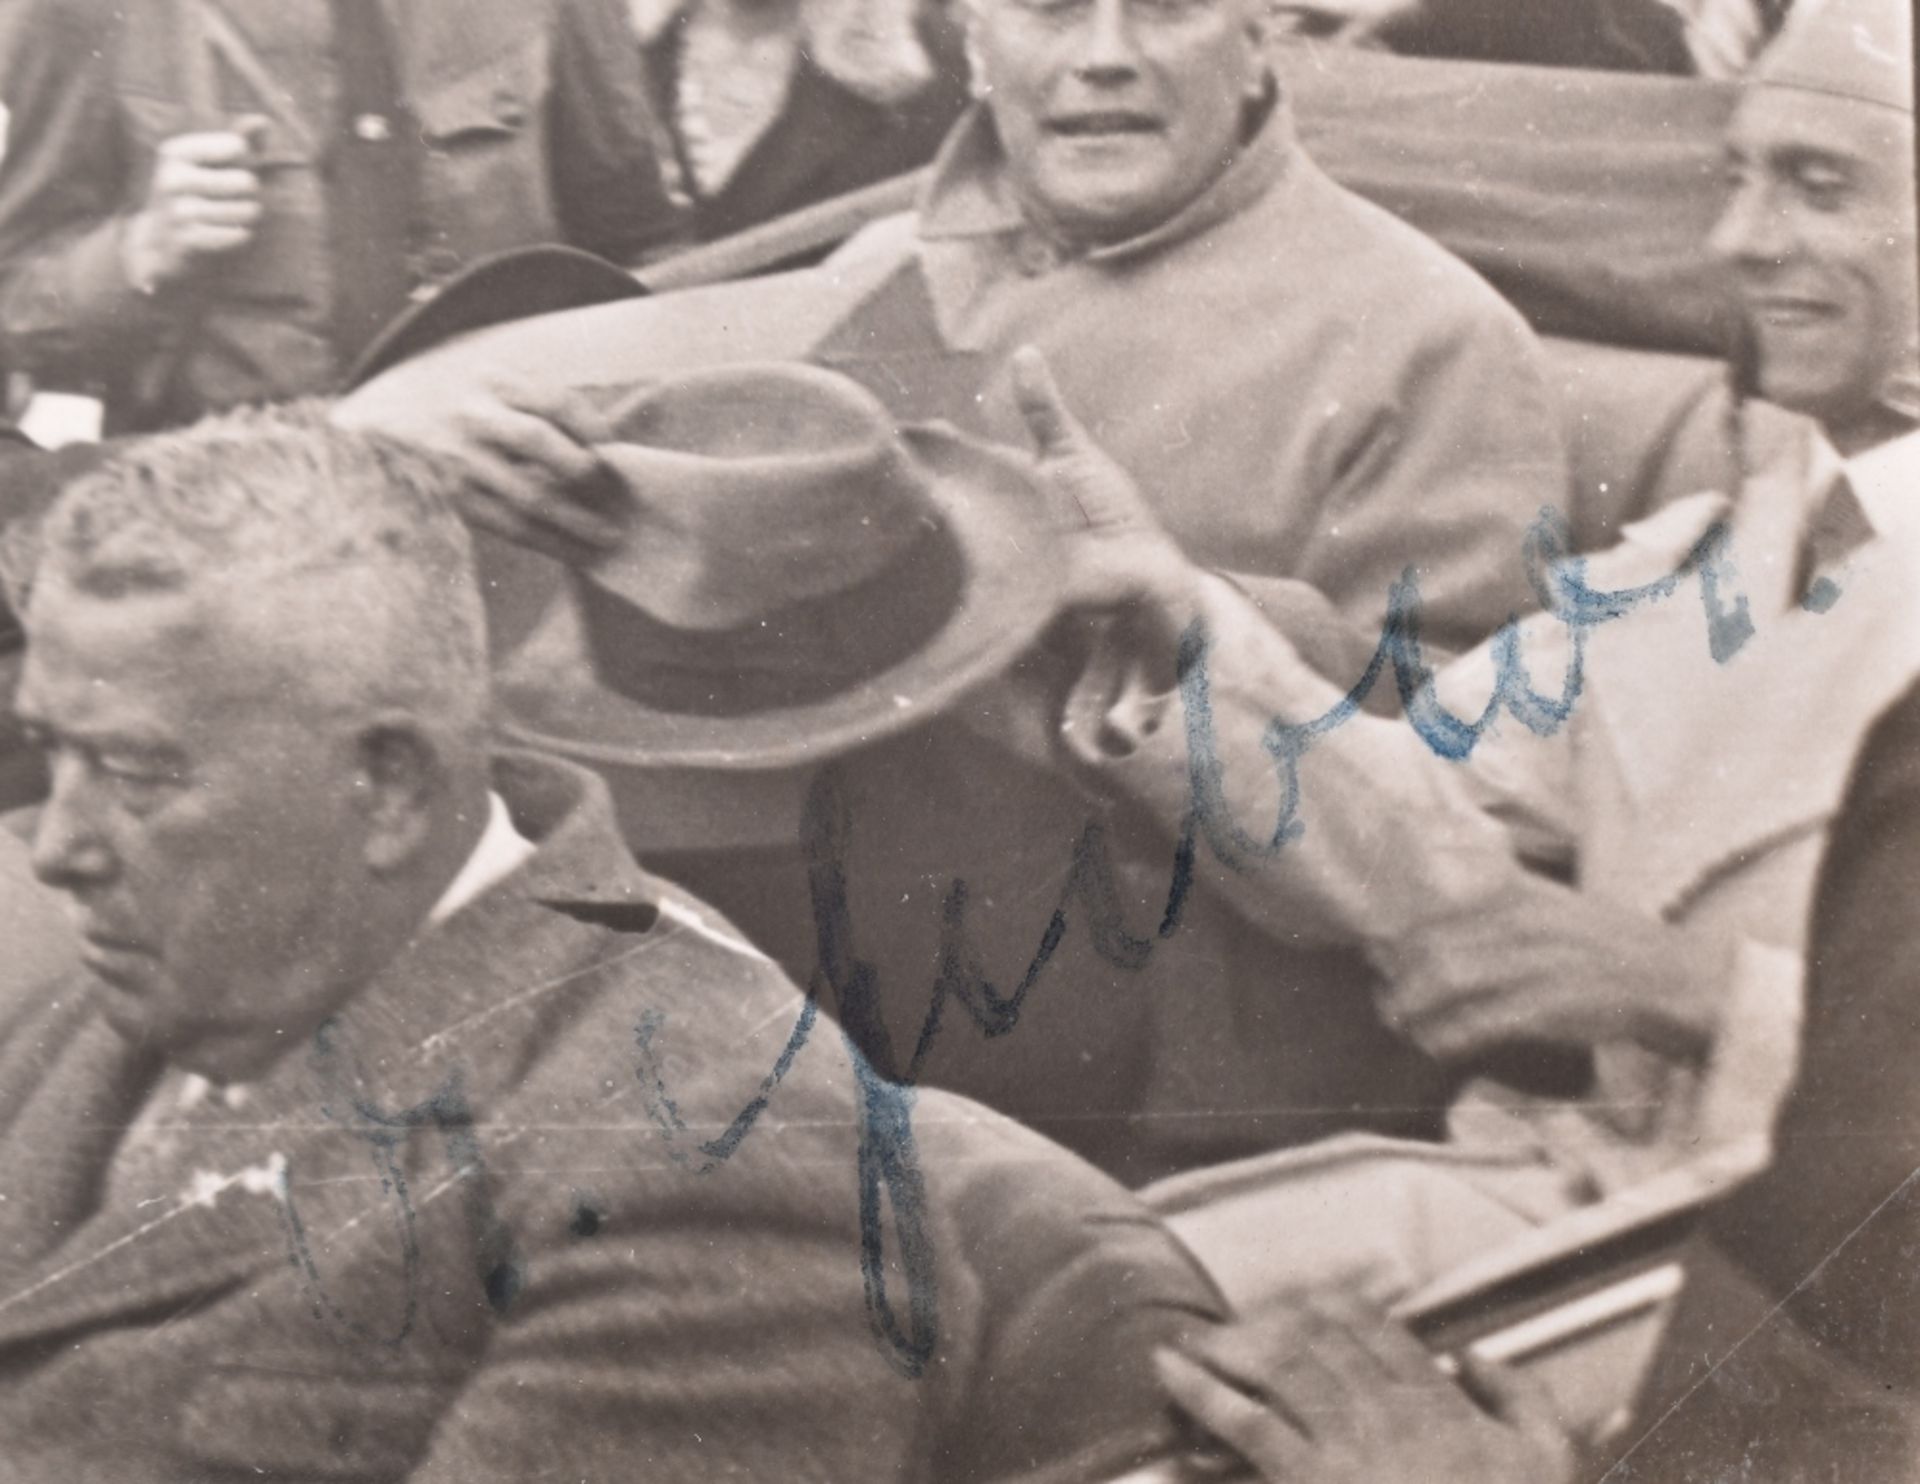 Herman Goering Family Archive – Signed Photographs of Adolf Hitler and Dr Joseph Goebbels - Image 4 of 7